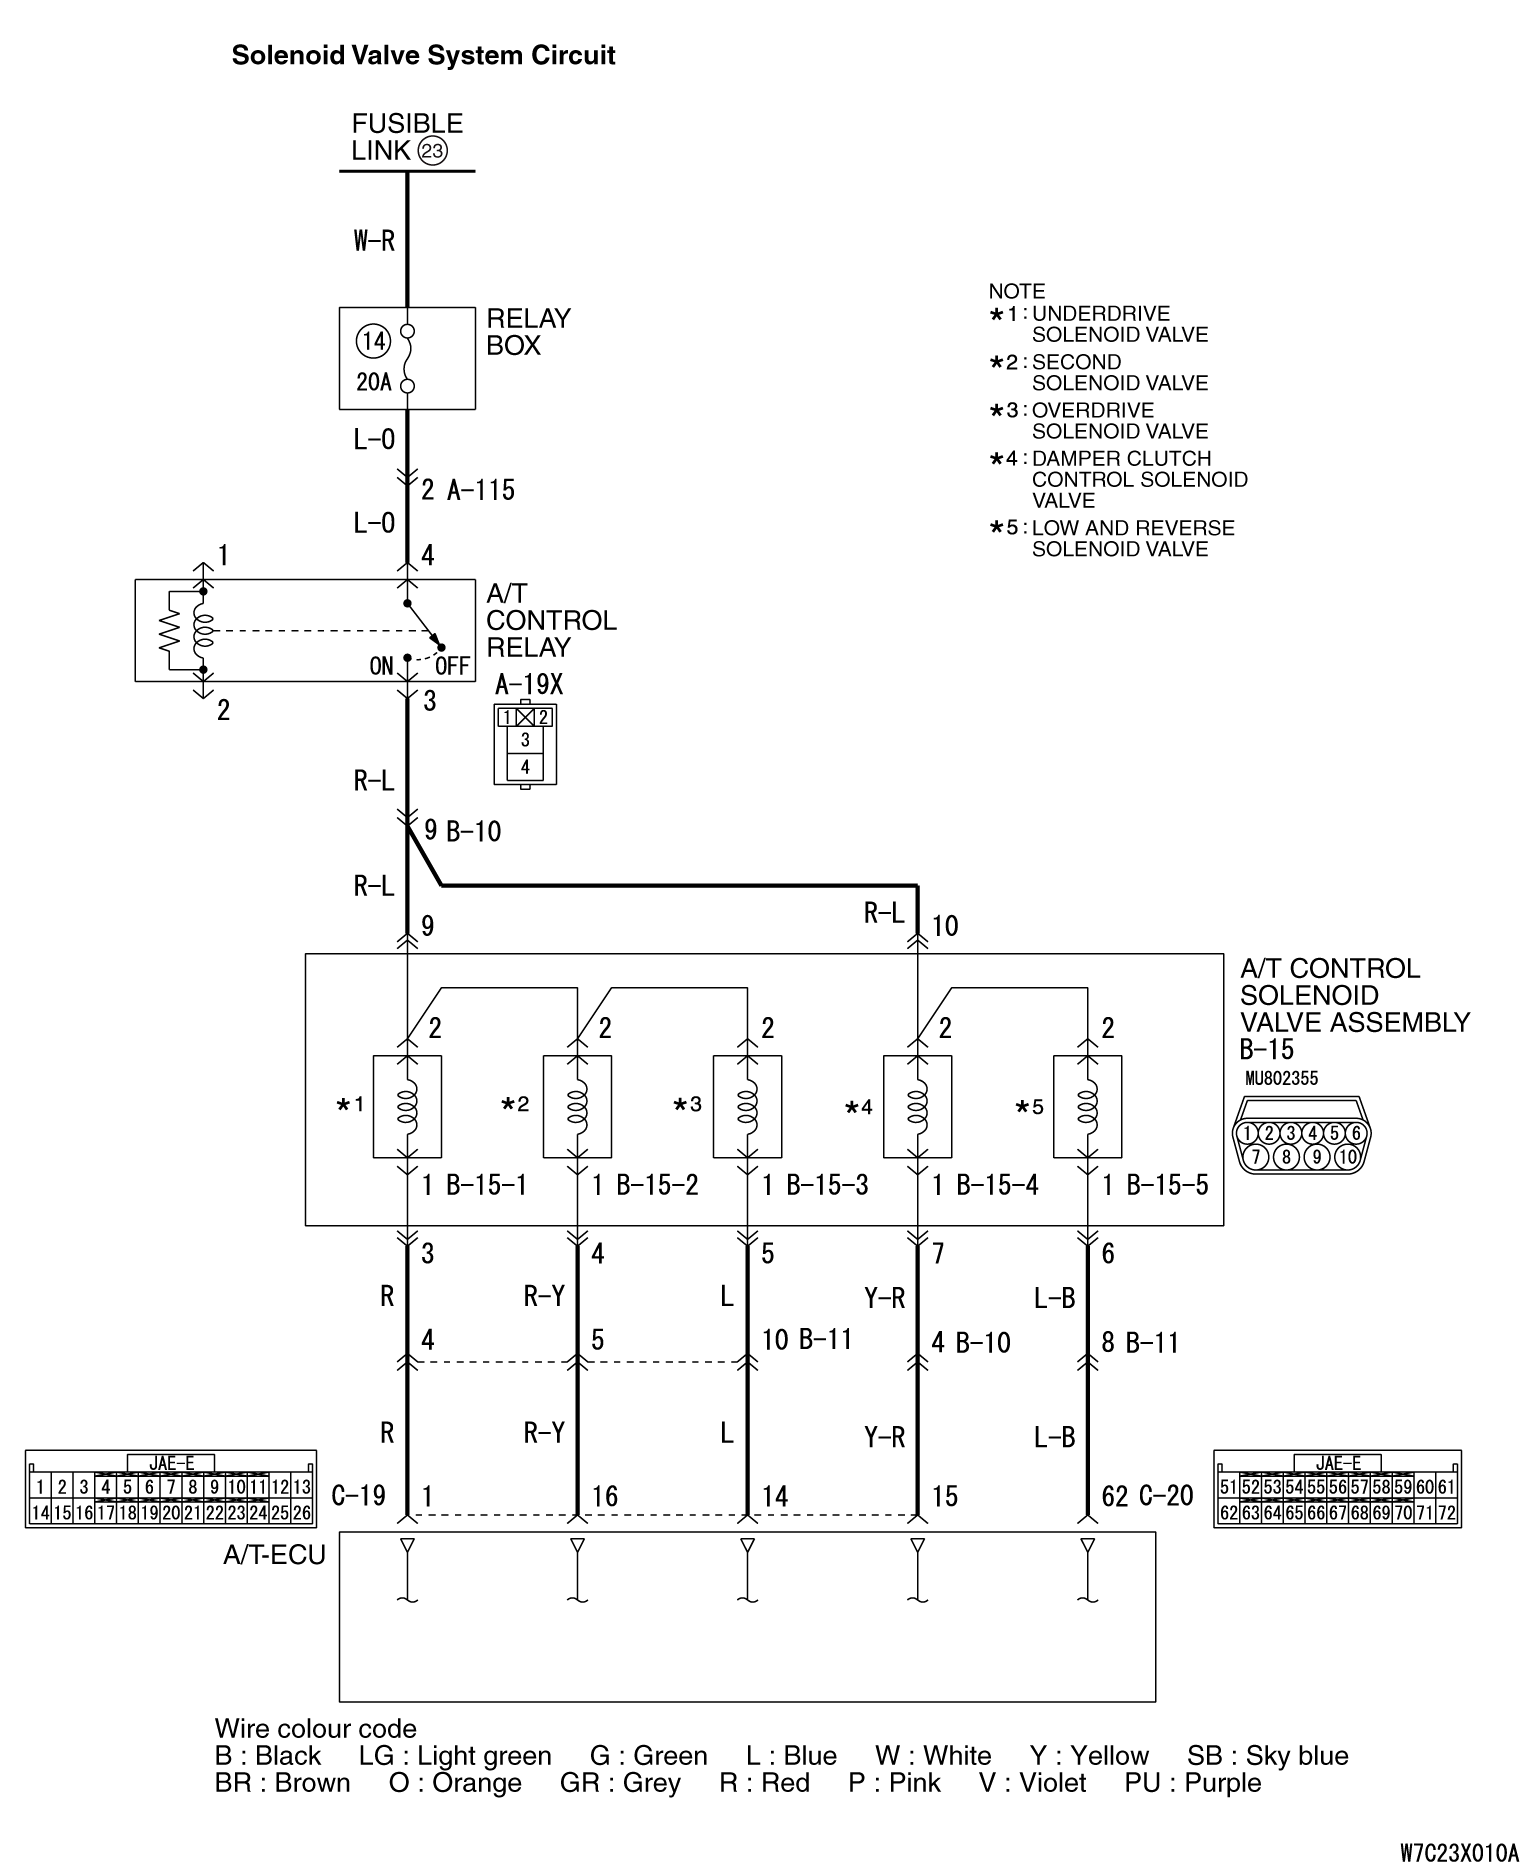 Code No.P1773 (P0750) Low-reverse solenoid valve system